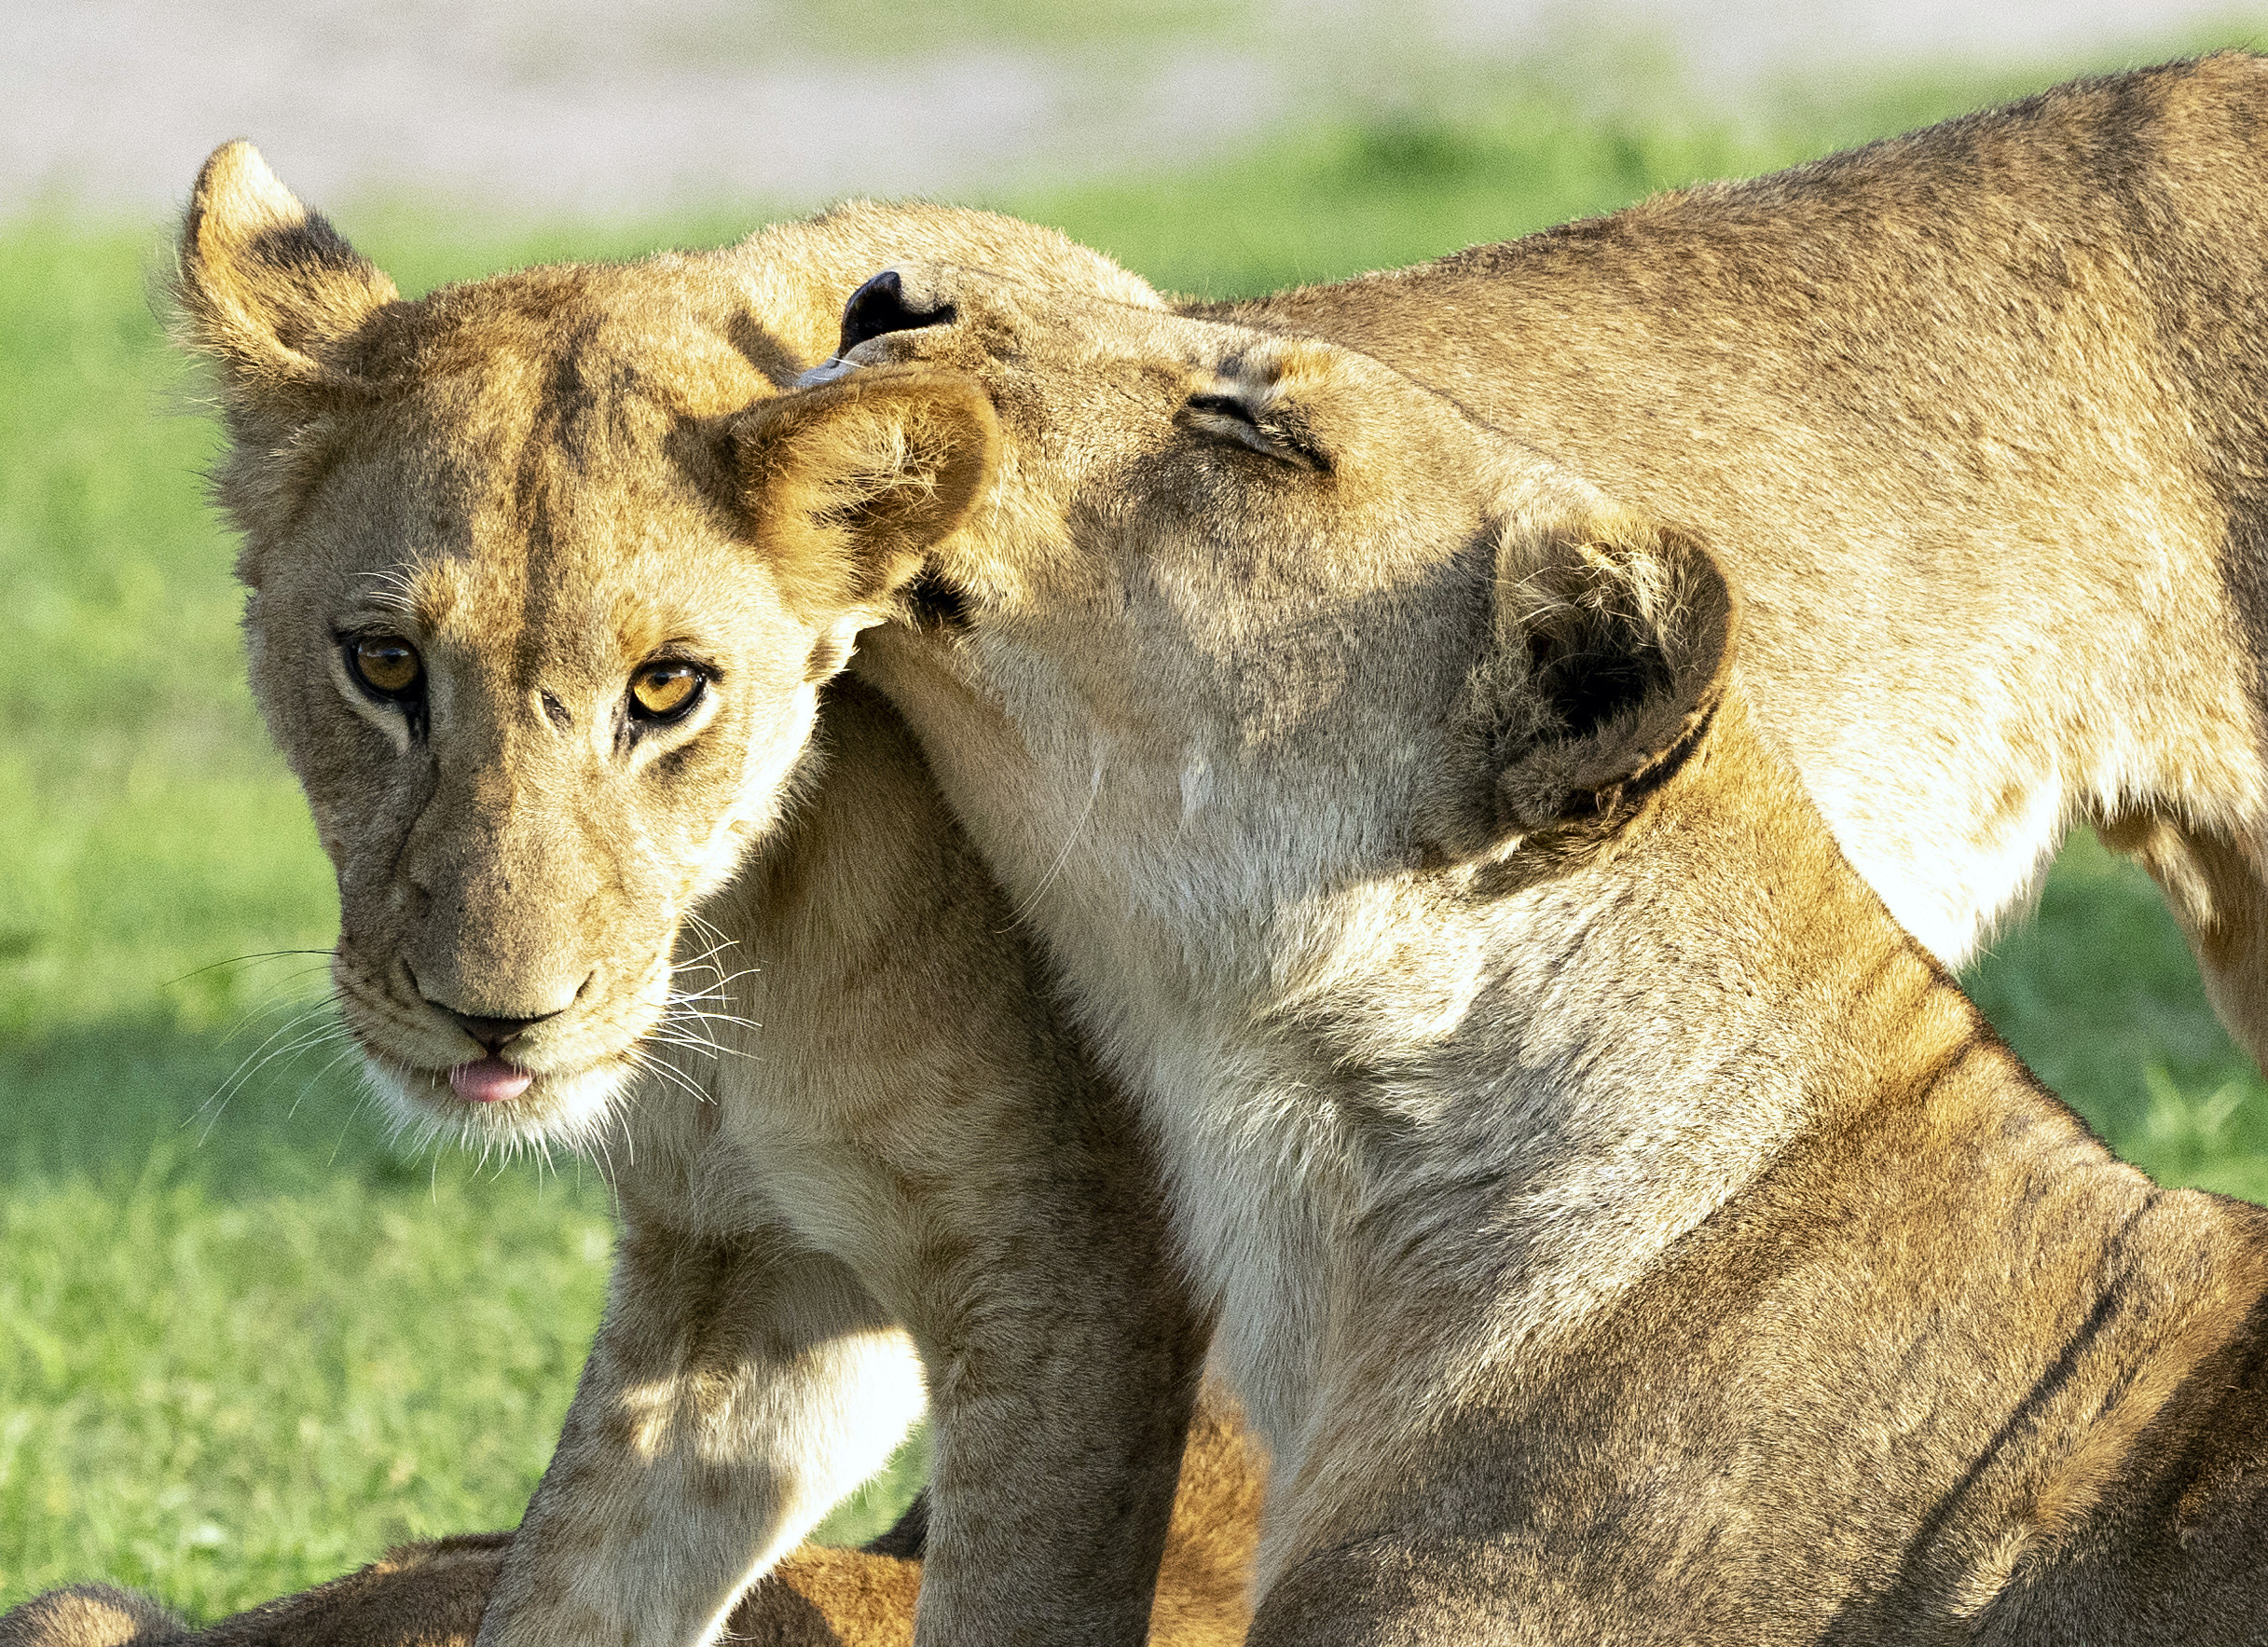 Lion mother nuzzling cub